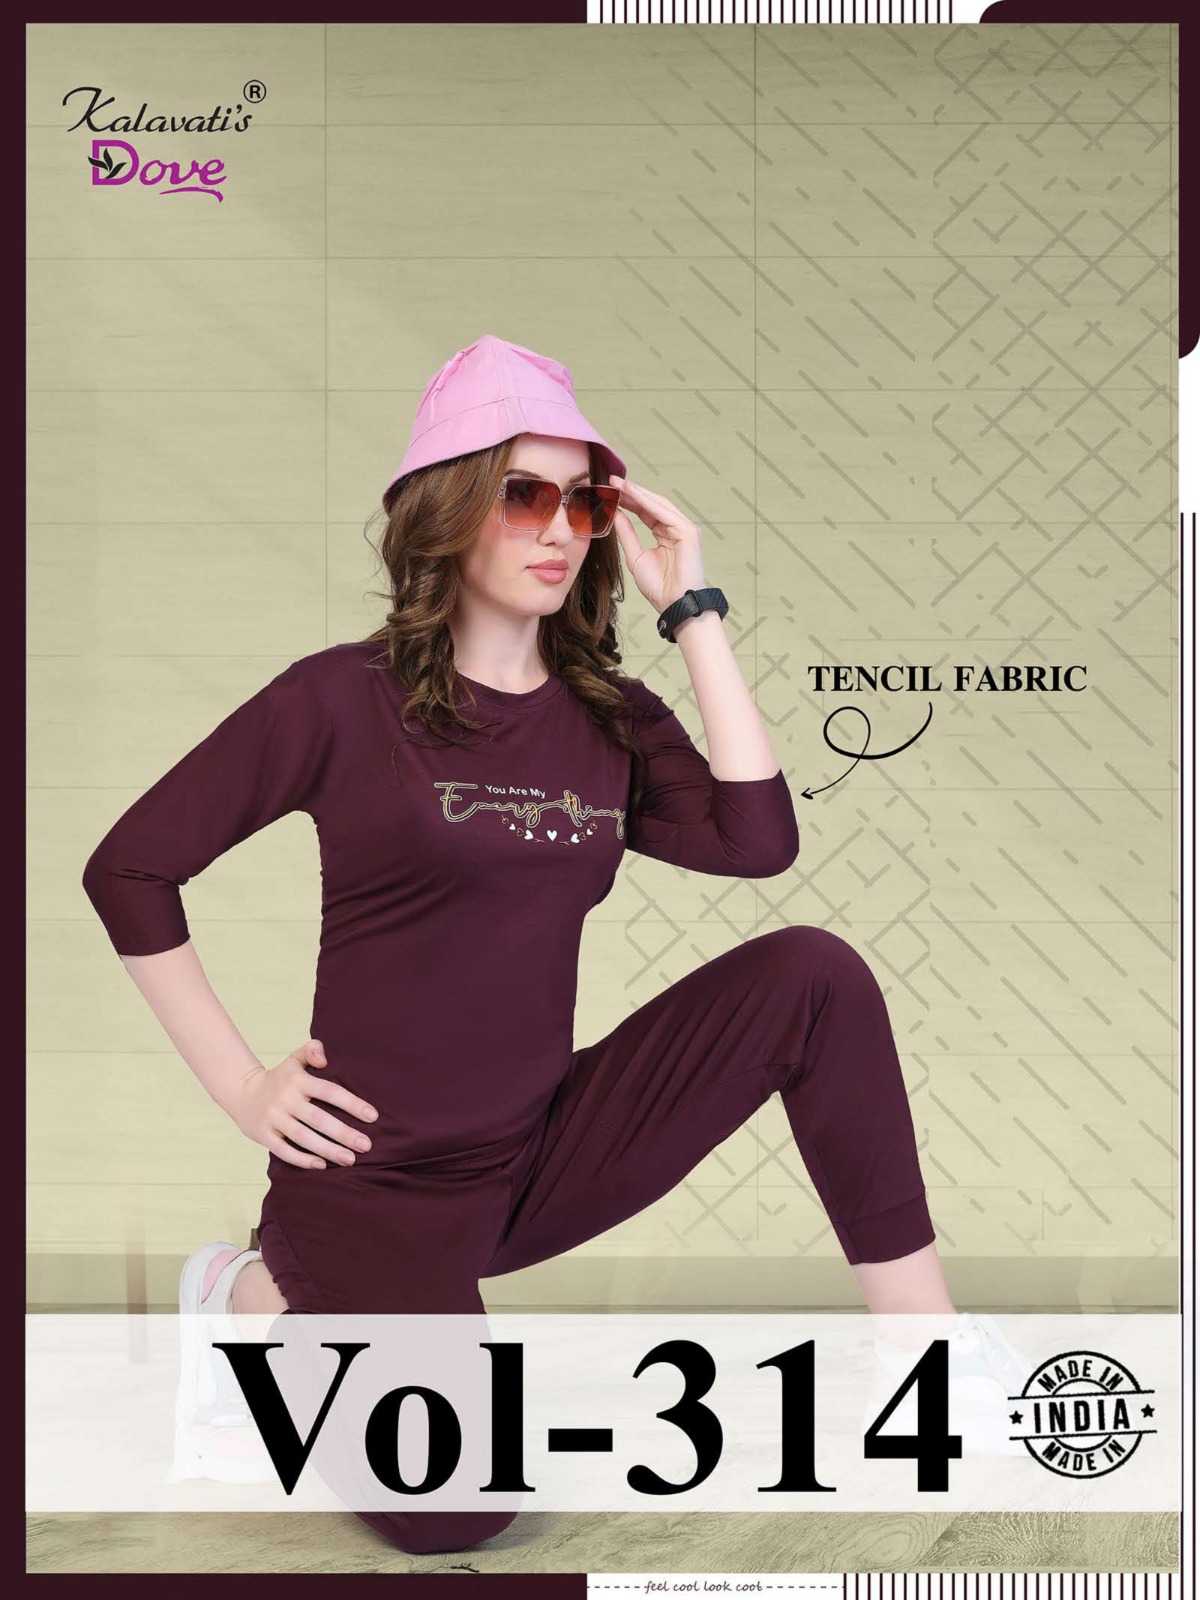 kalavati dove tencil fabric vol 314 daily use fancy night suit collection